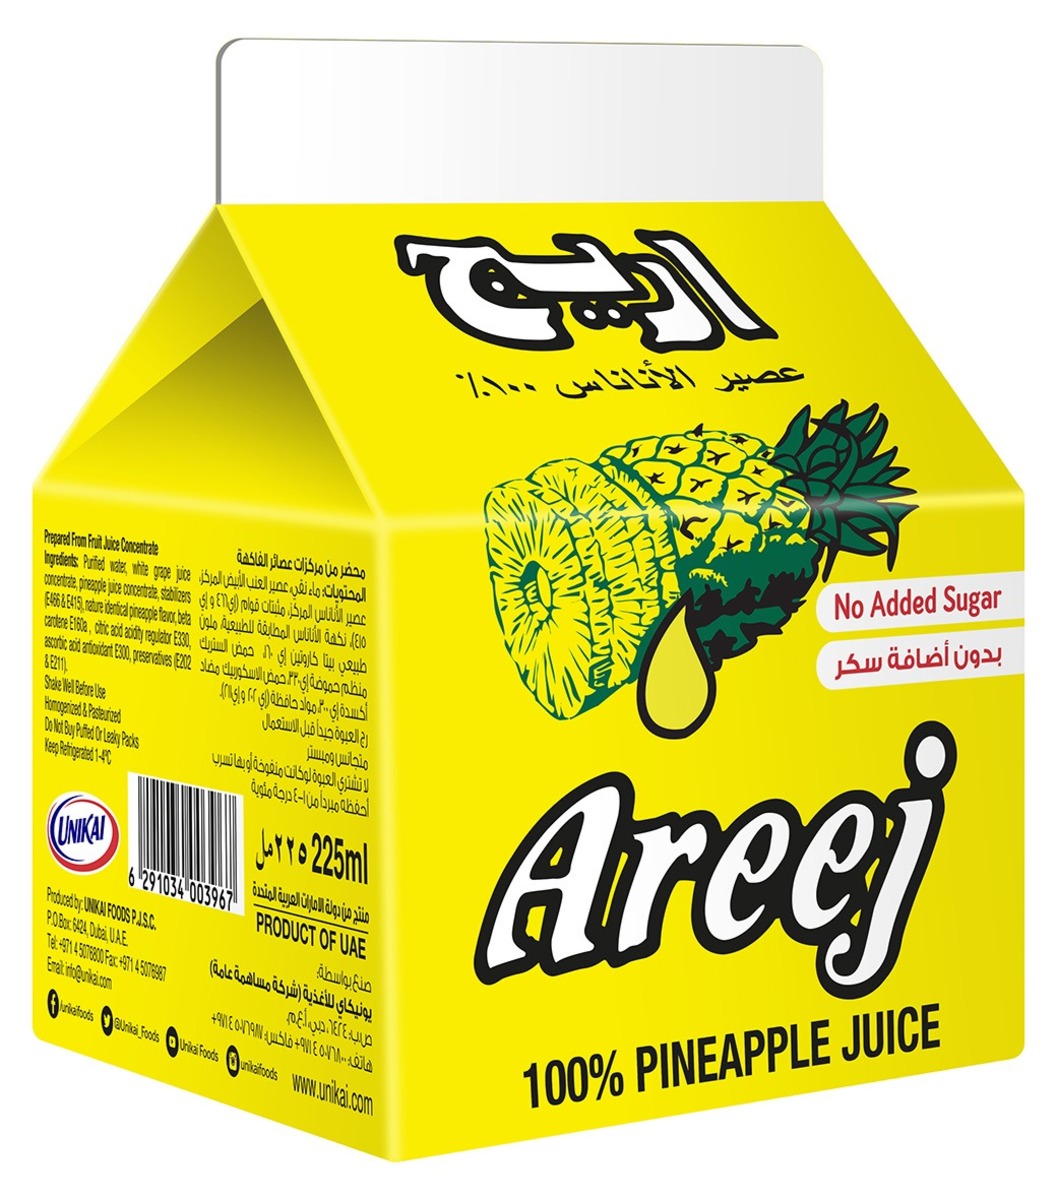 Areej Pineapple Flavoured Drink 225 ml